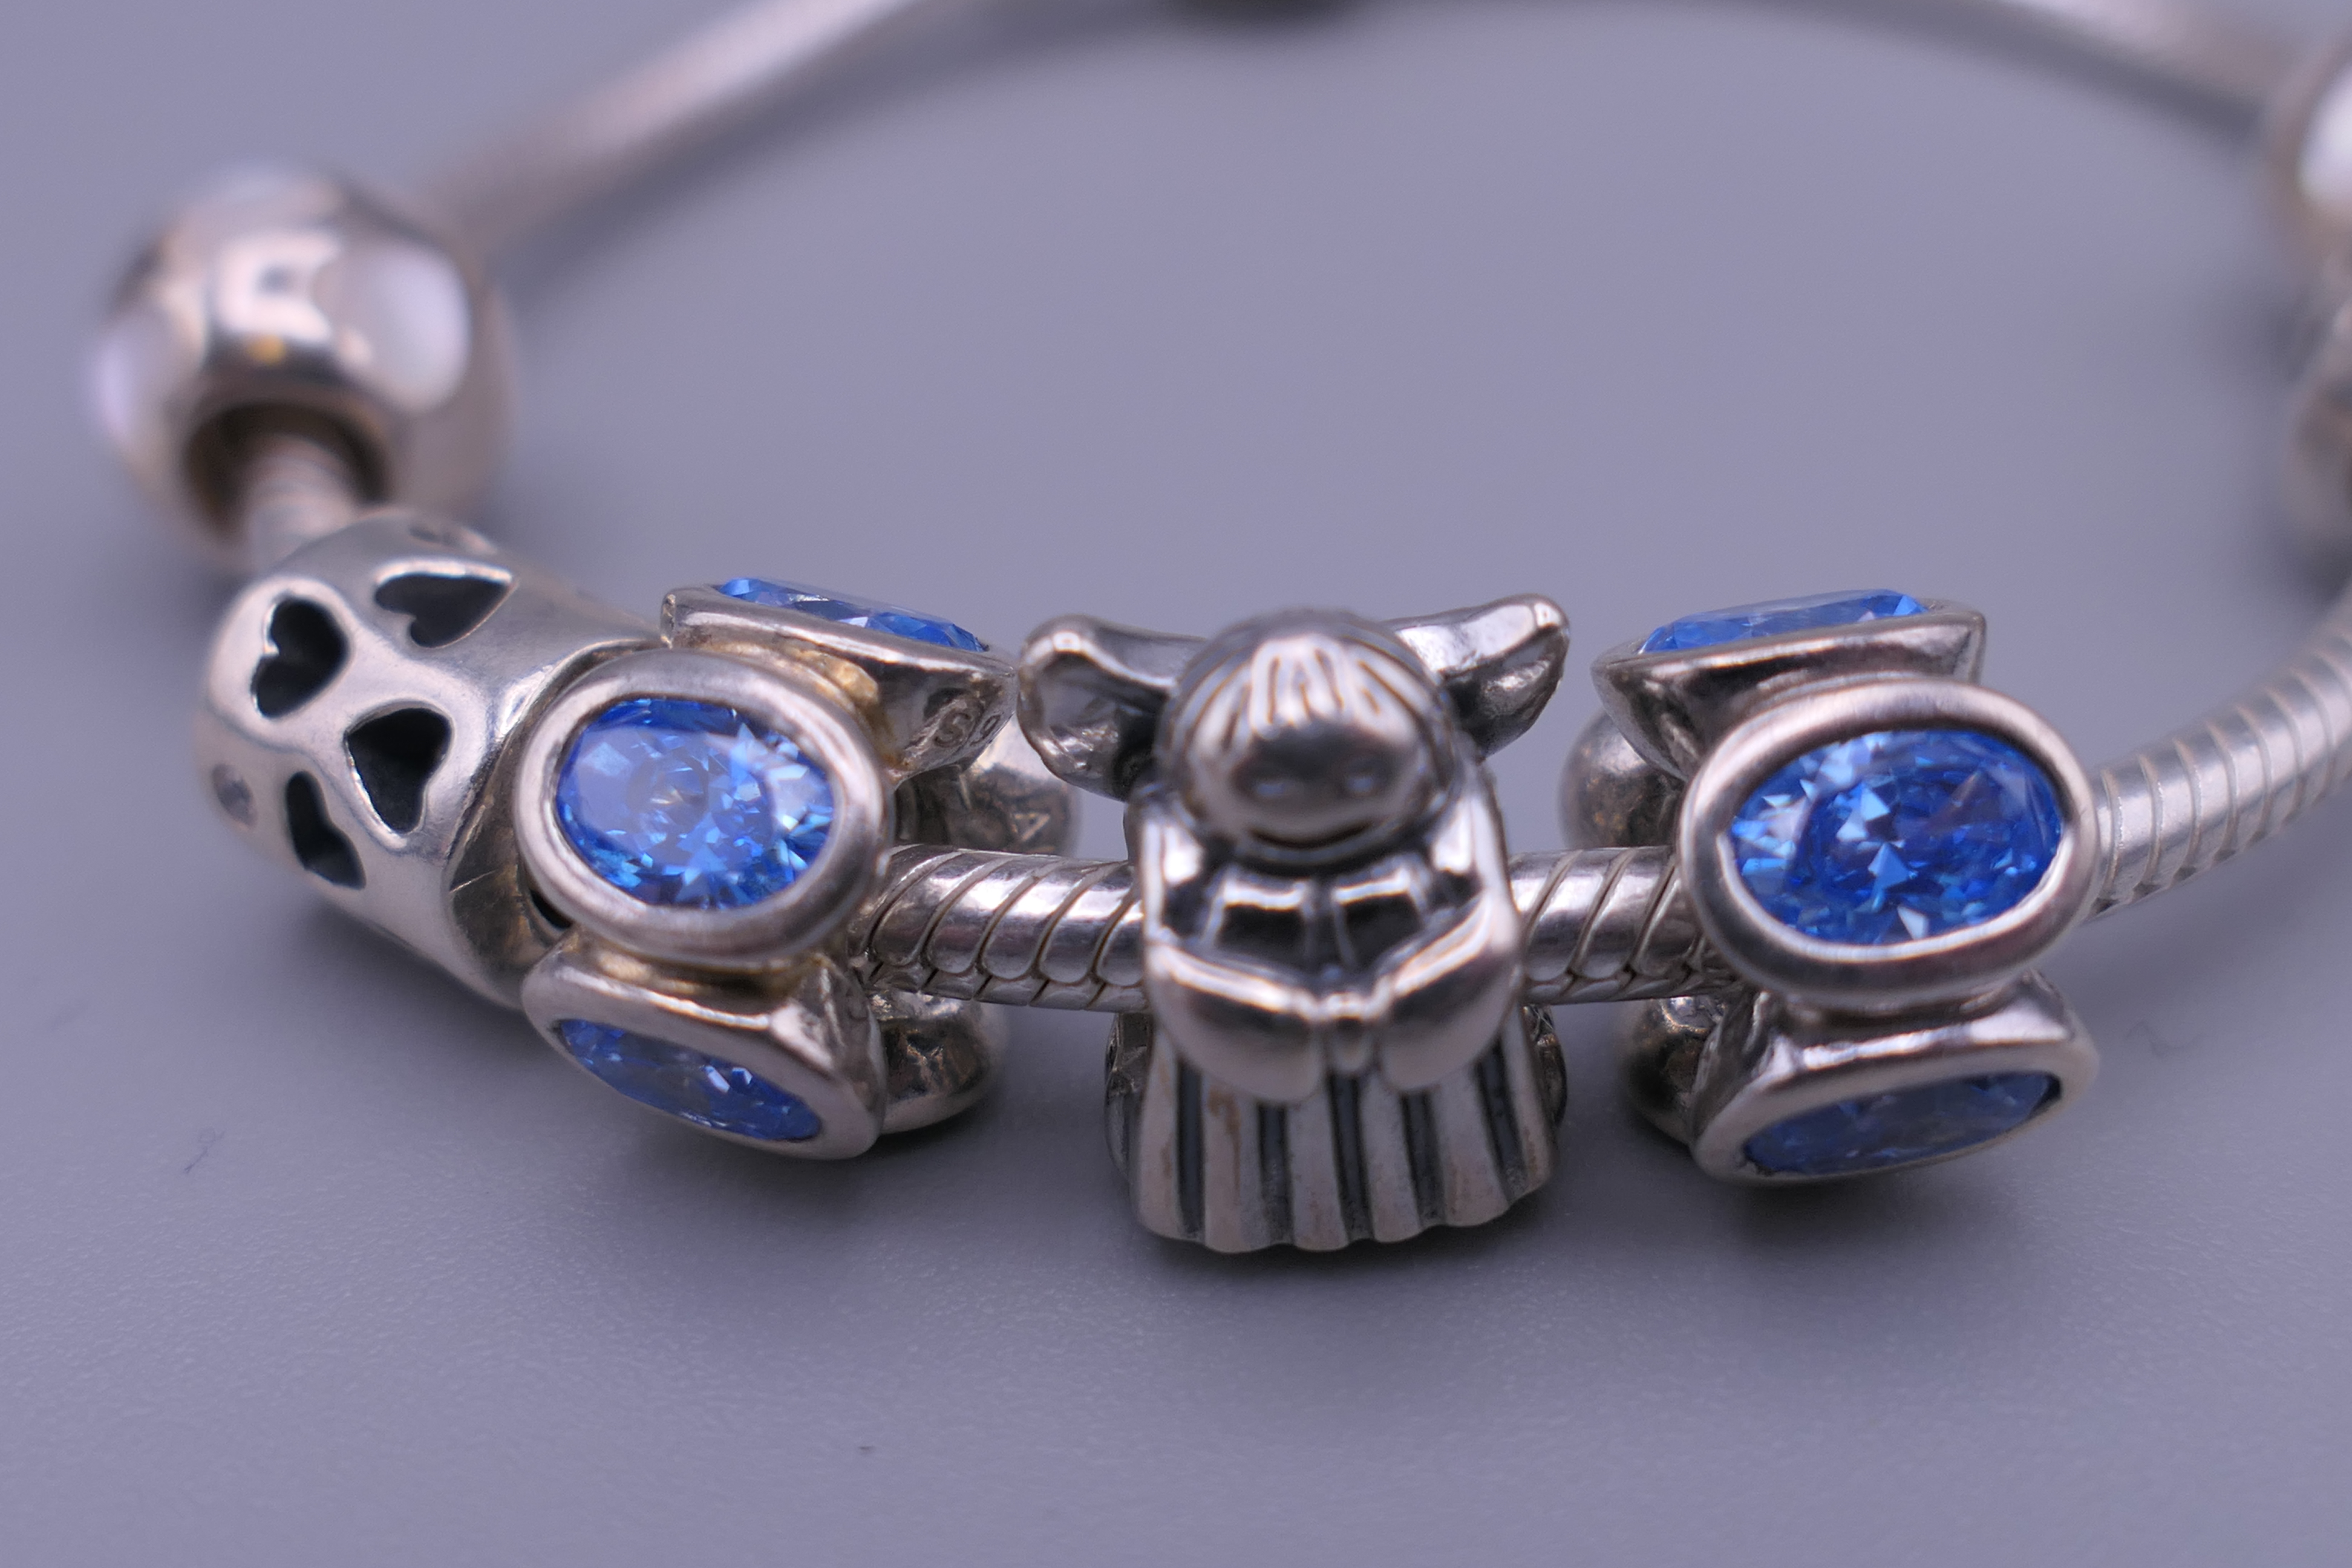 A Pandora silver charm bracelet in a Pandora bag. Approximately 20 cm long. - Image 3 of 4